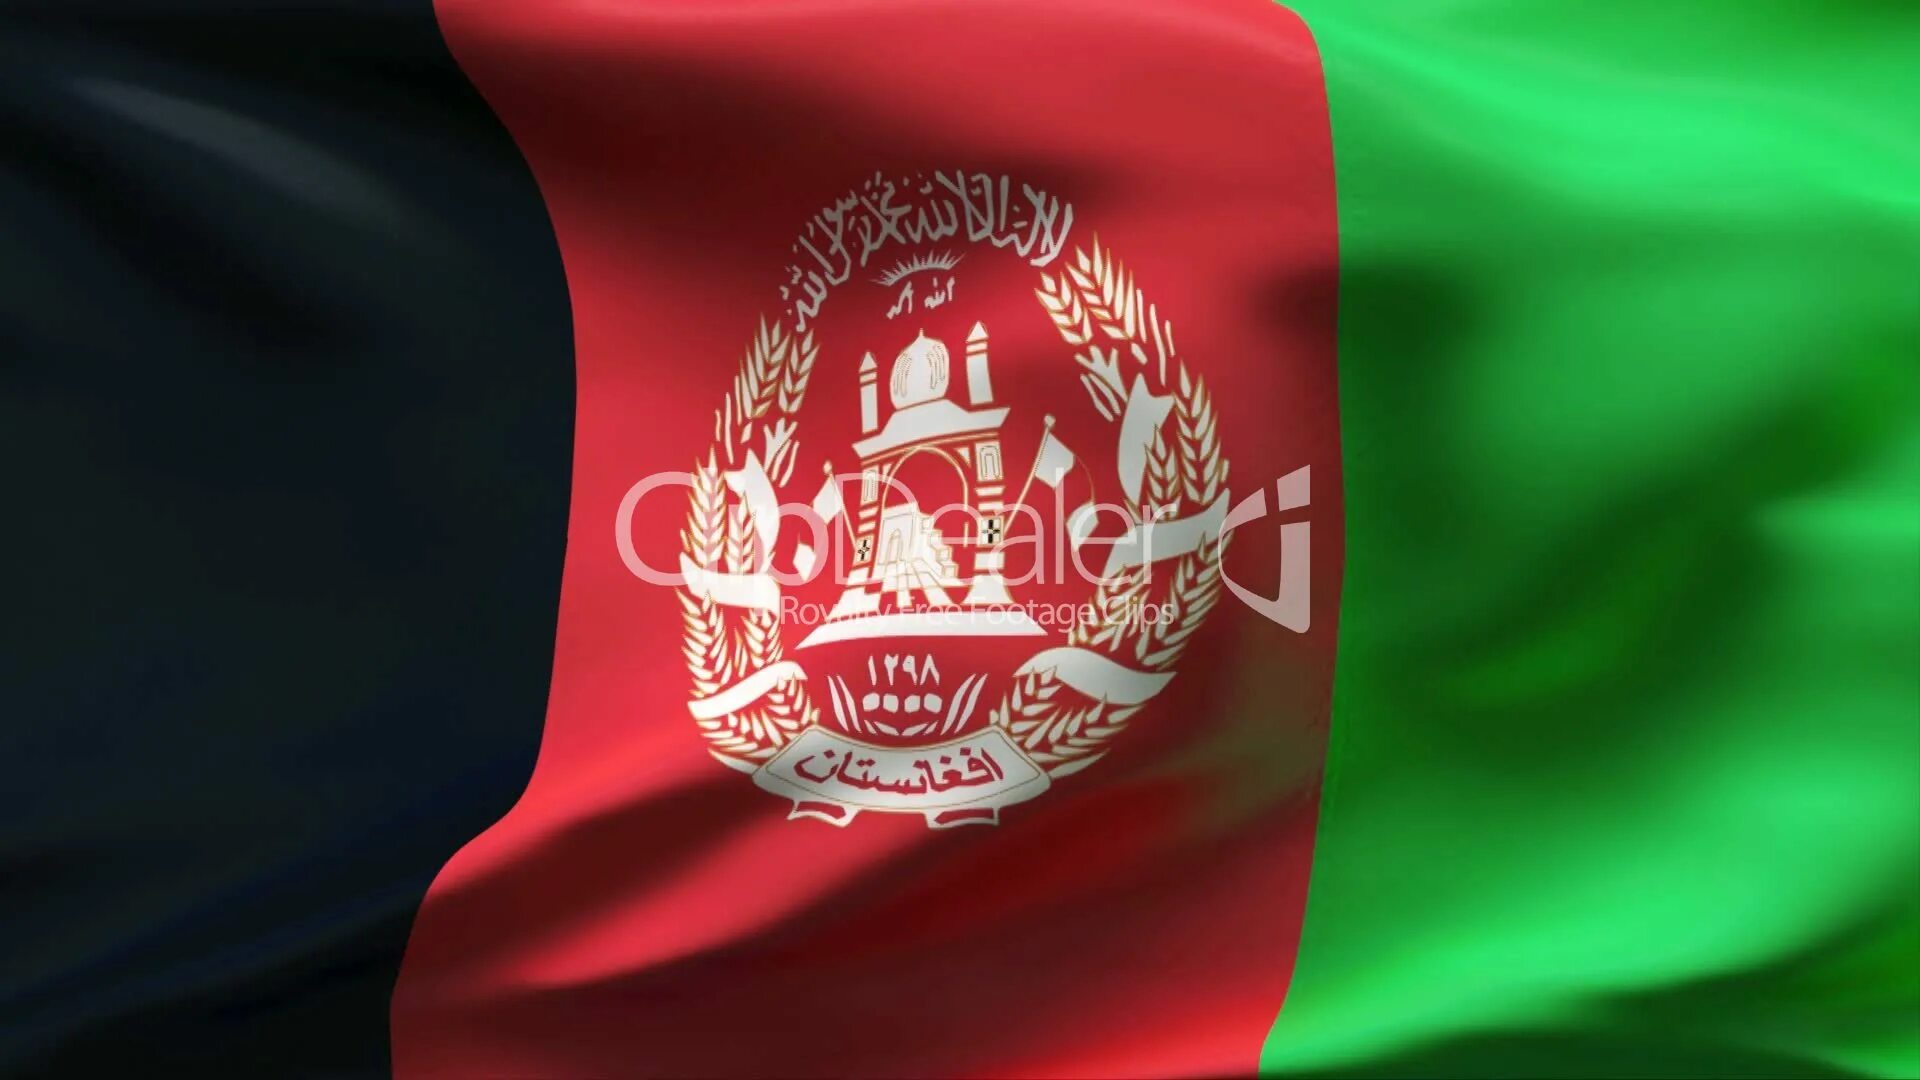 Флаг Афганистана 1989. Флаг Афганистана 2001. Флаг Афганистана 2022. Флаг Афганистана 1979.